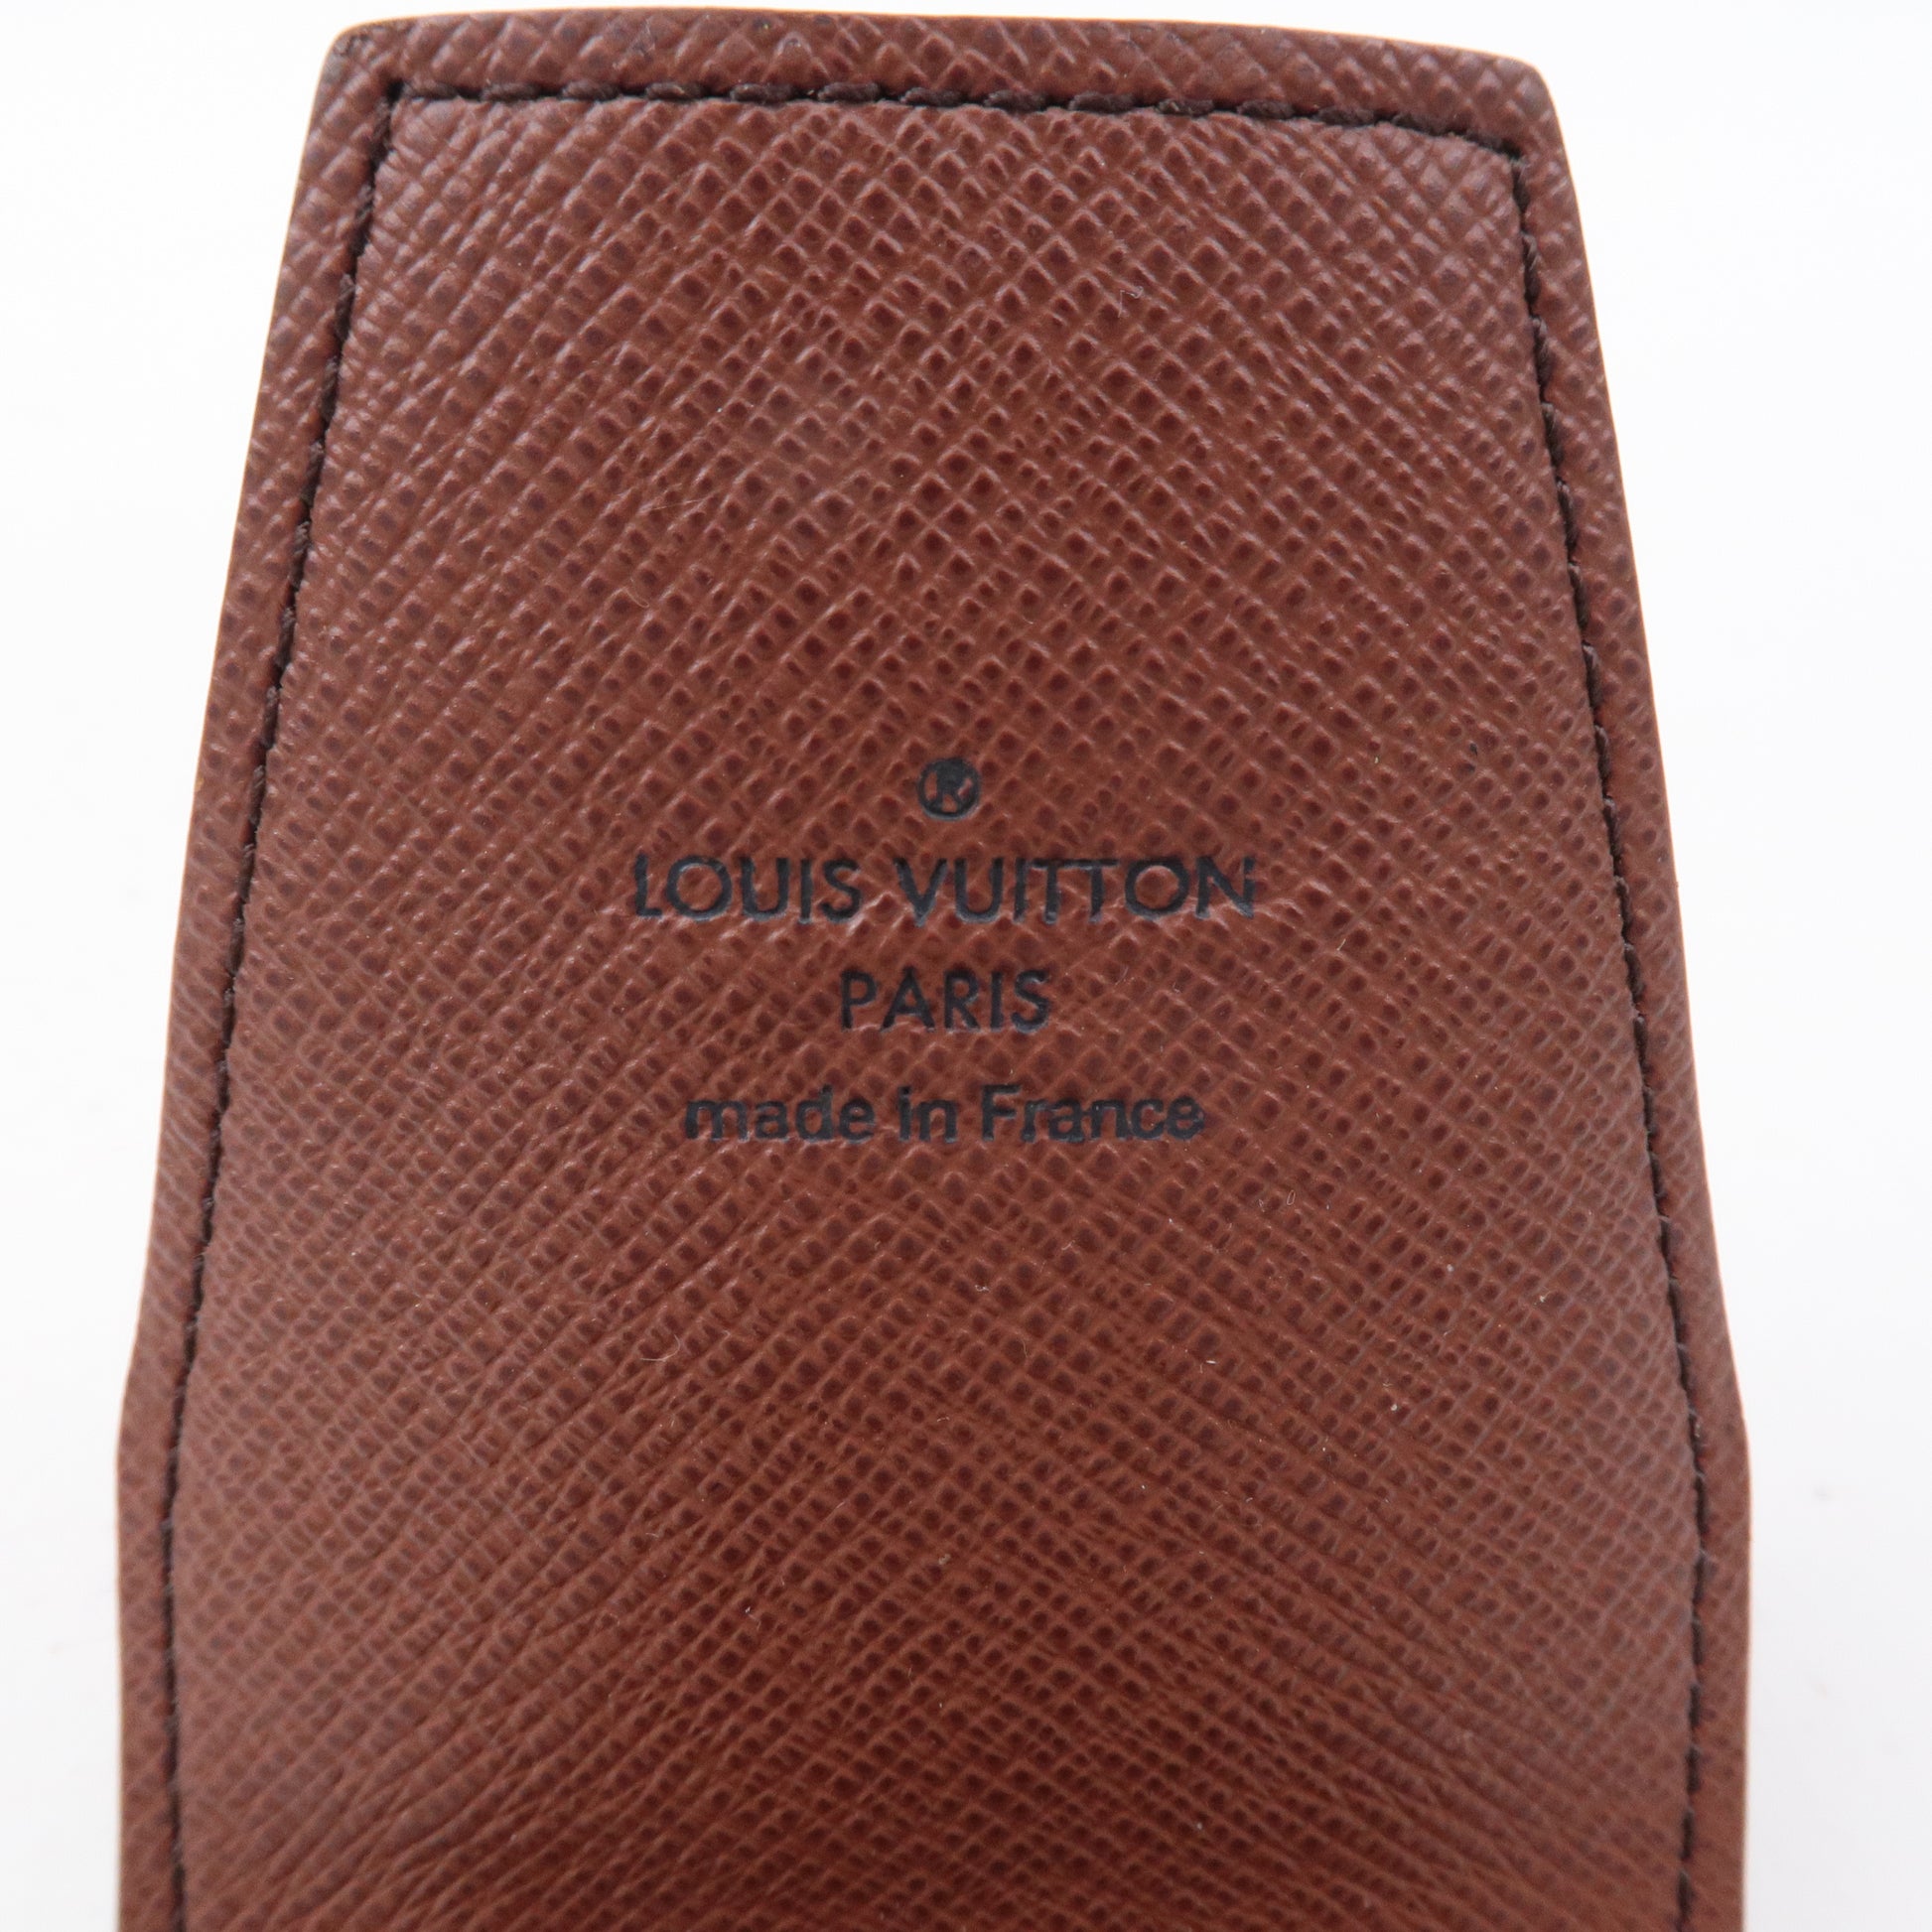 Louis Vuitton Vintage Designer Etui Cigarette Case Made in Spain